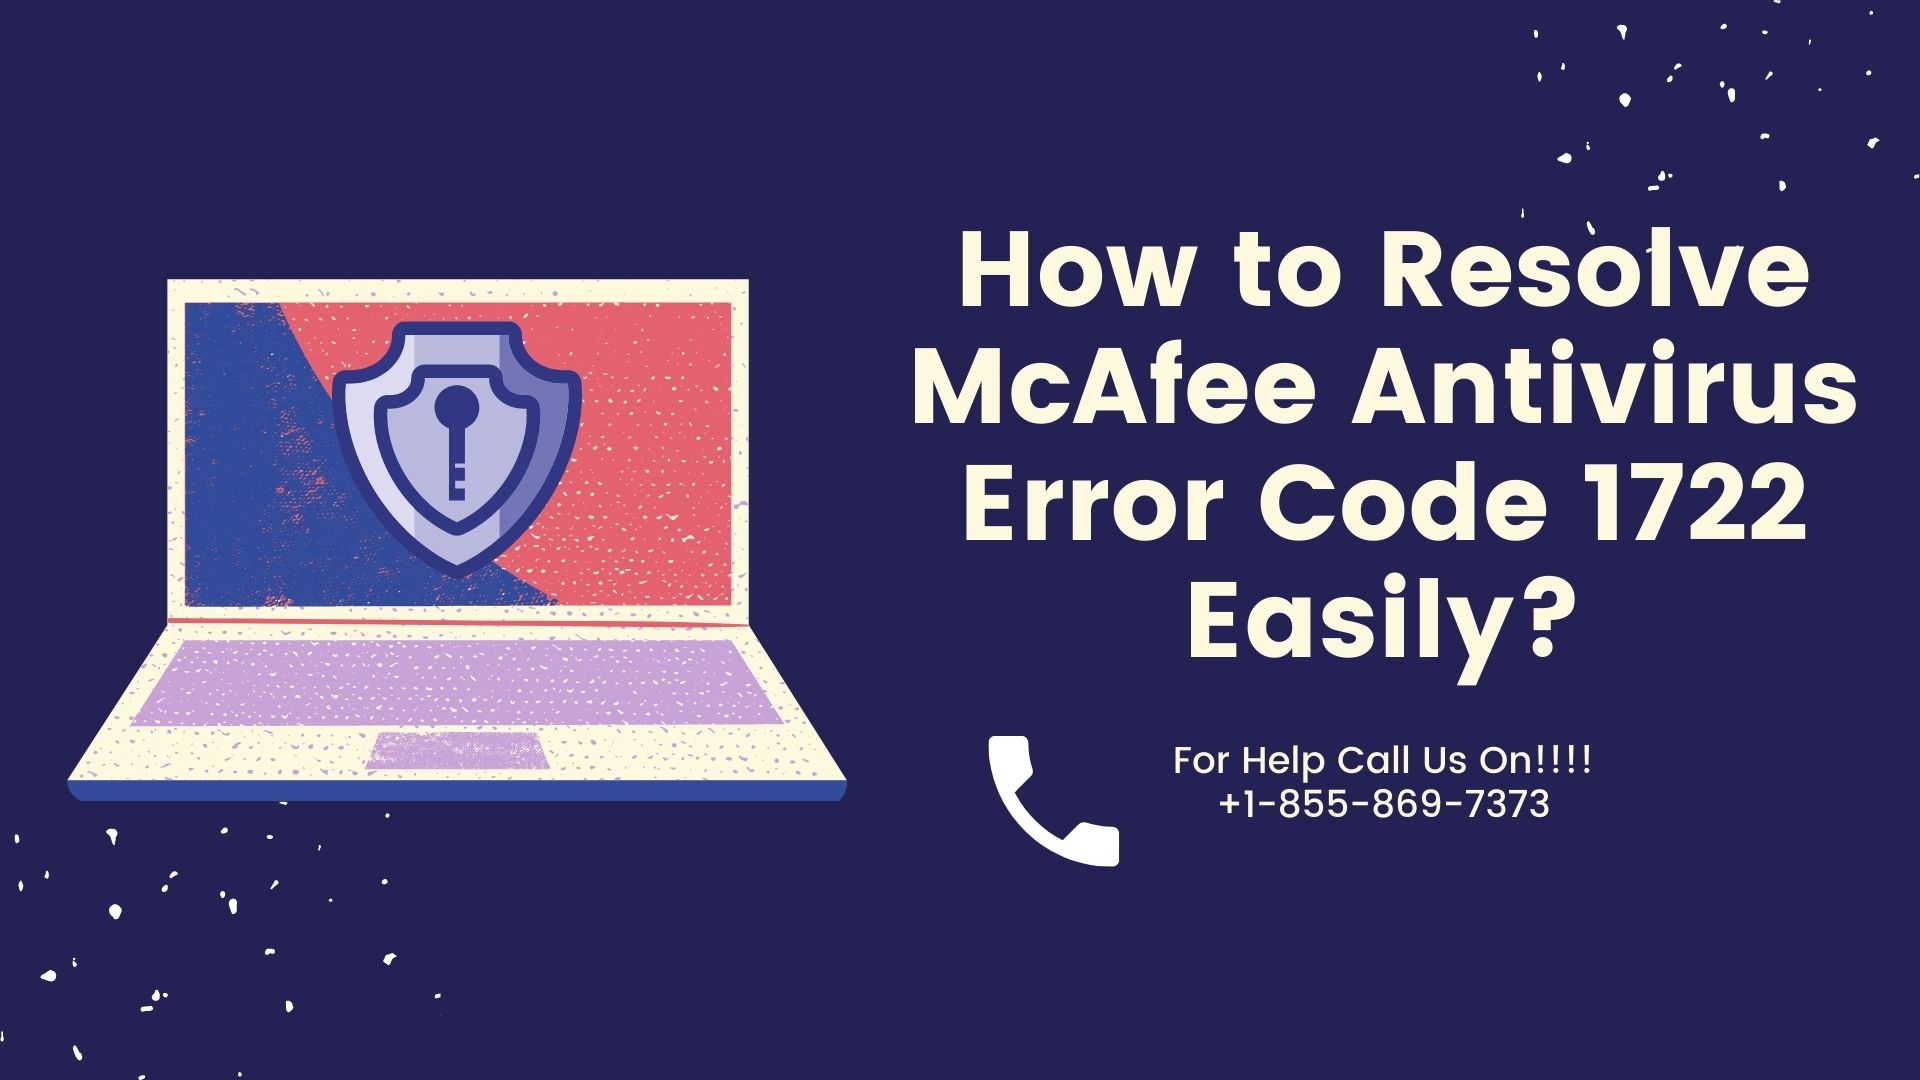 How to Resolve McAfee Antivirus Error Code 1722 Easily?